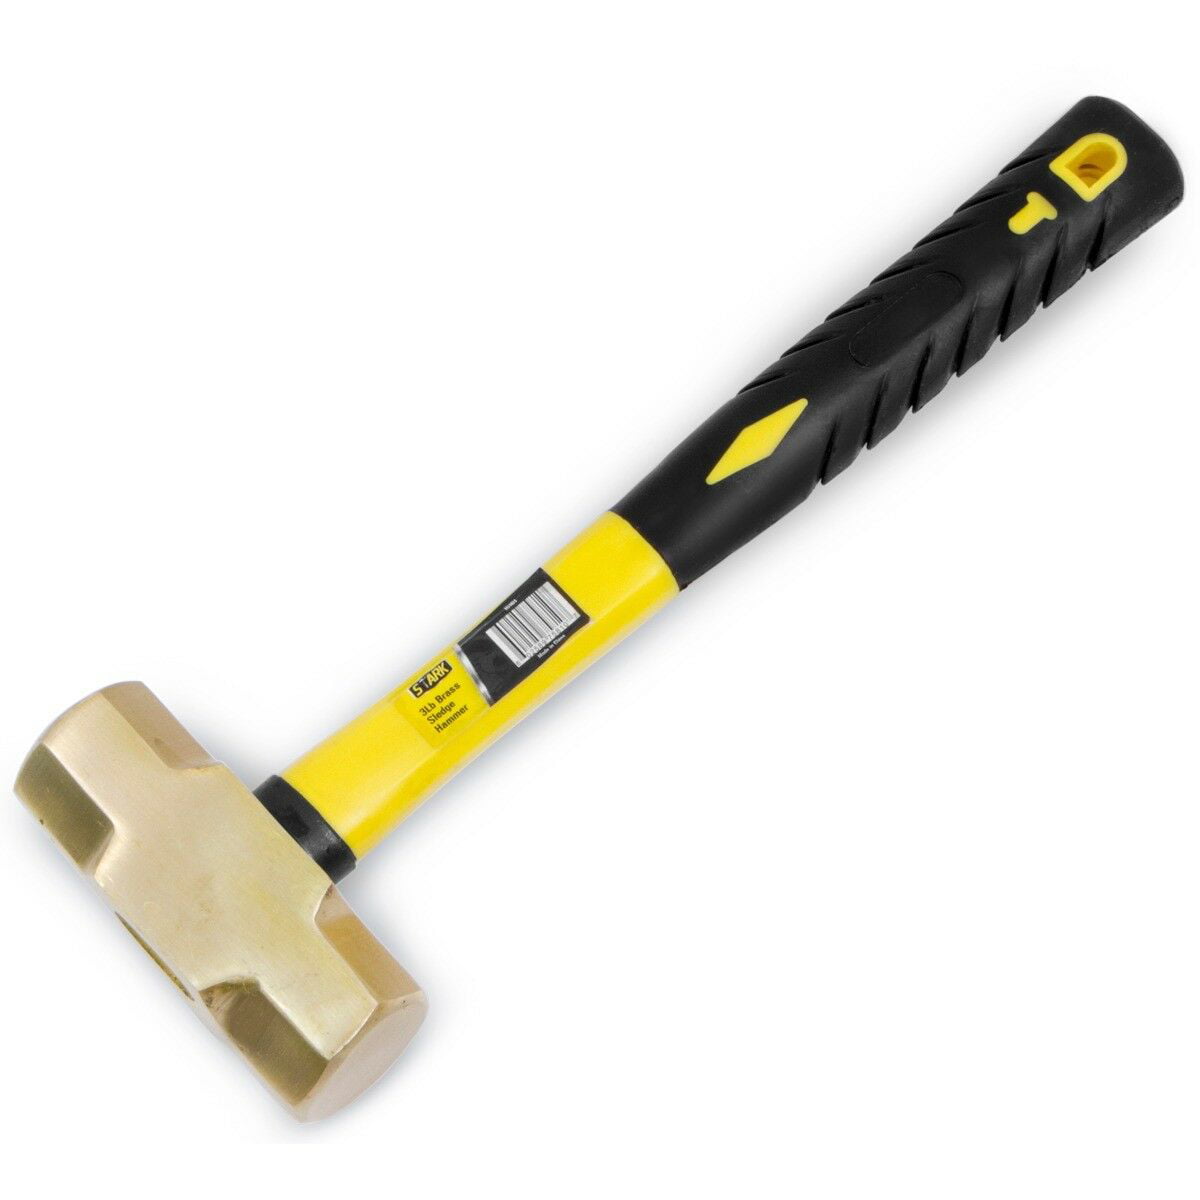 4 lbs. Details about   Klein Tools Sledge Hammer Brass Head Fiberglass Rubber Grip Handle 16 in 